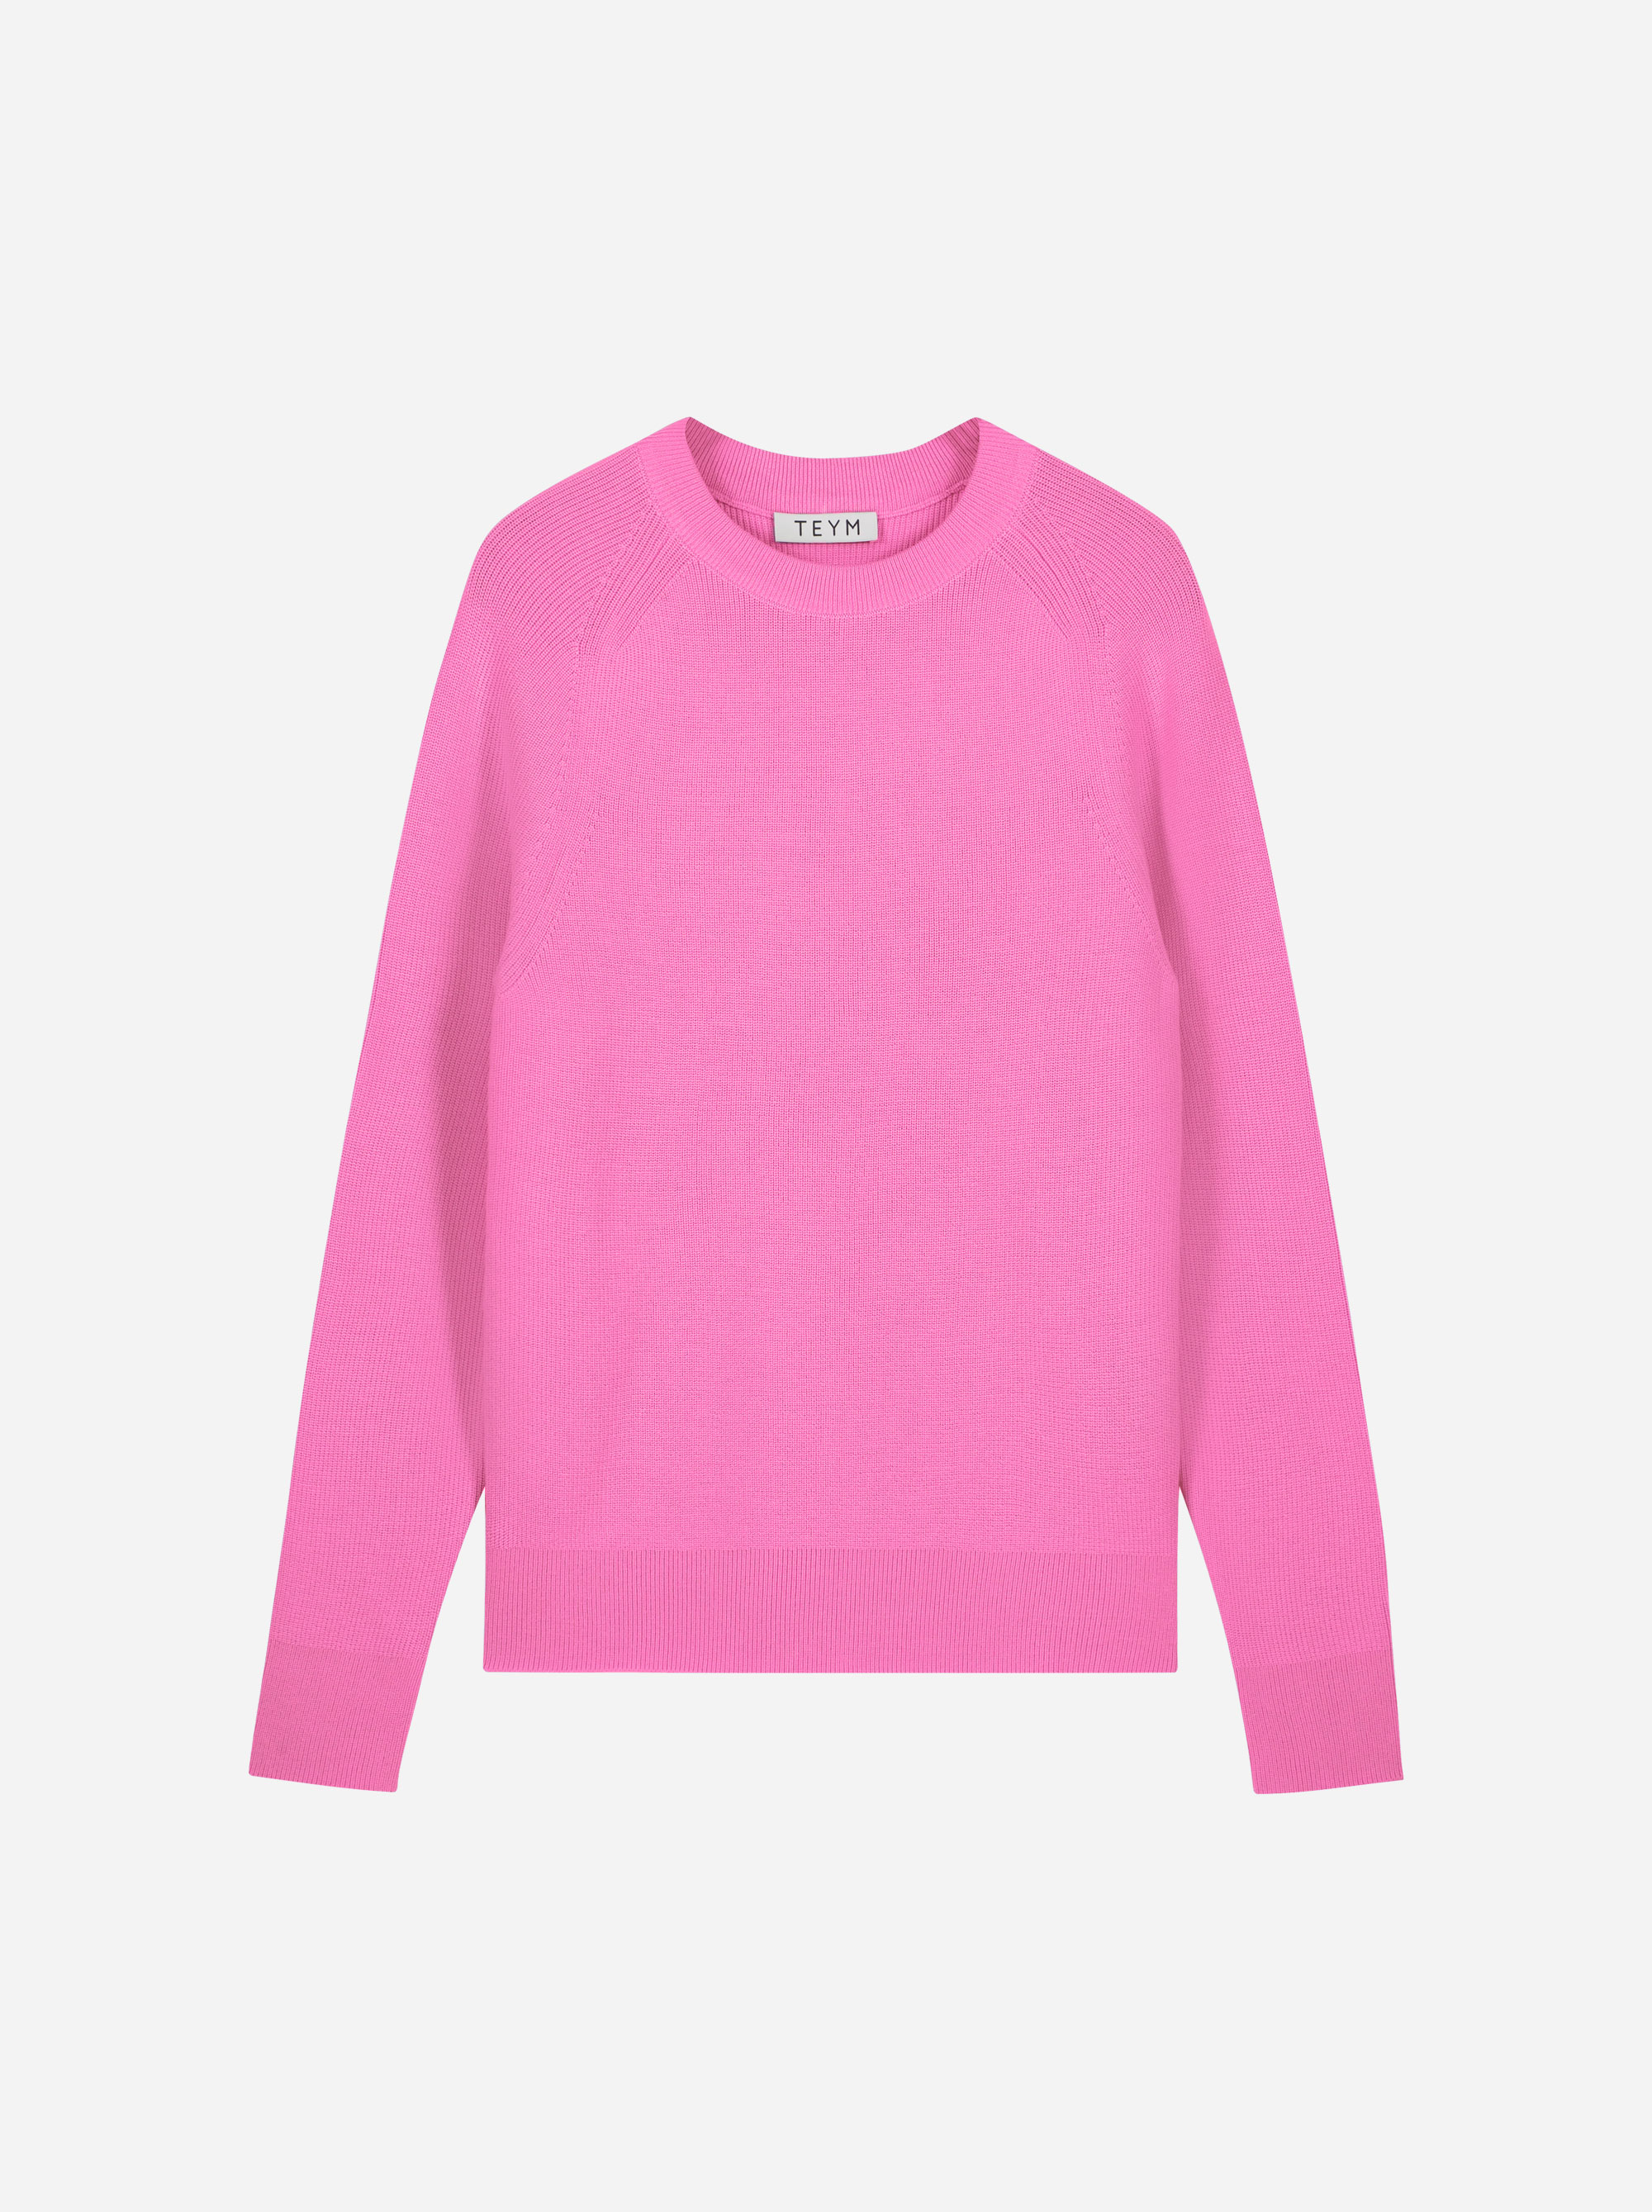 Teym - Crewneck - The Merino Sweater - Men - Bright Pink - 3